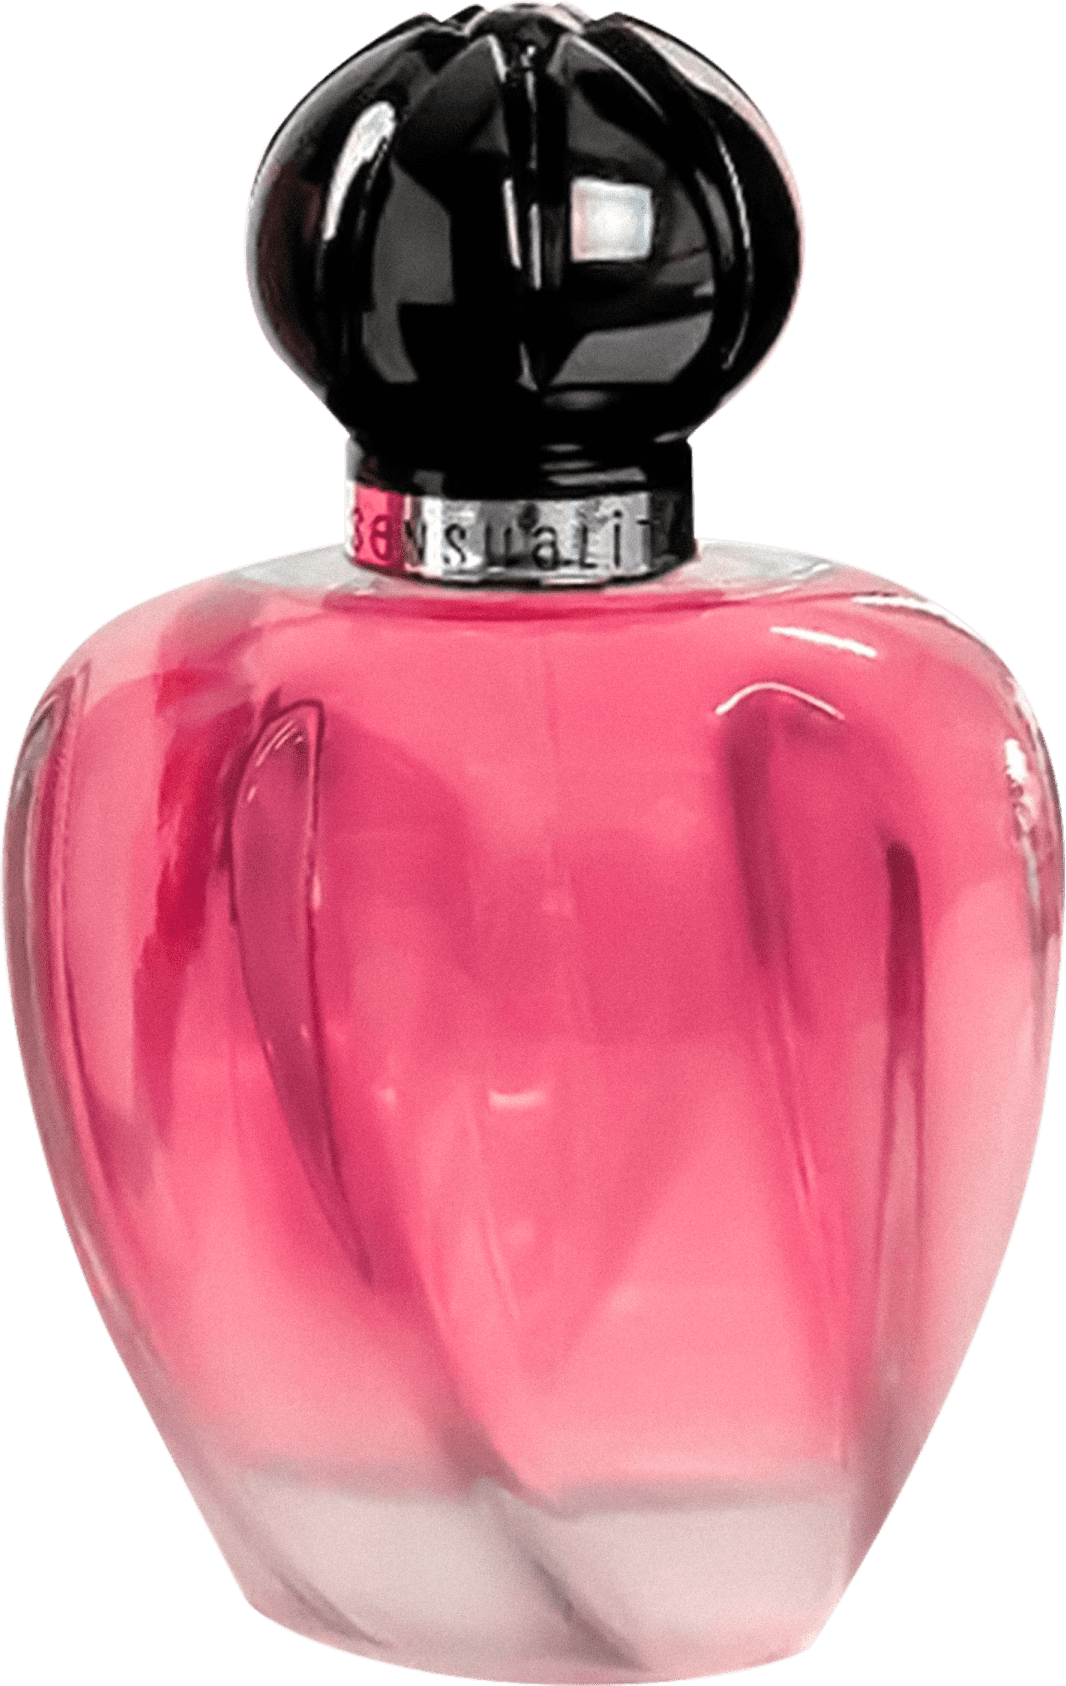 Good Girl Carolina Herrera 80ml - Perfume Feminino - Eau de Parfum -  Ousamais Brasil